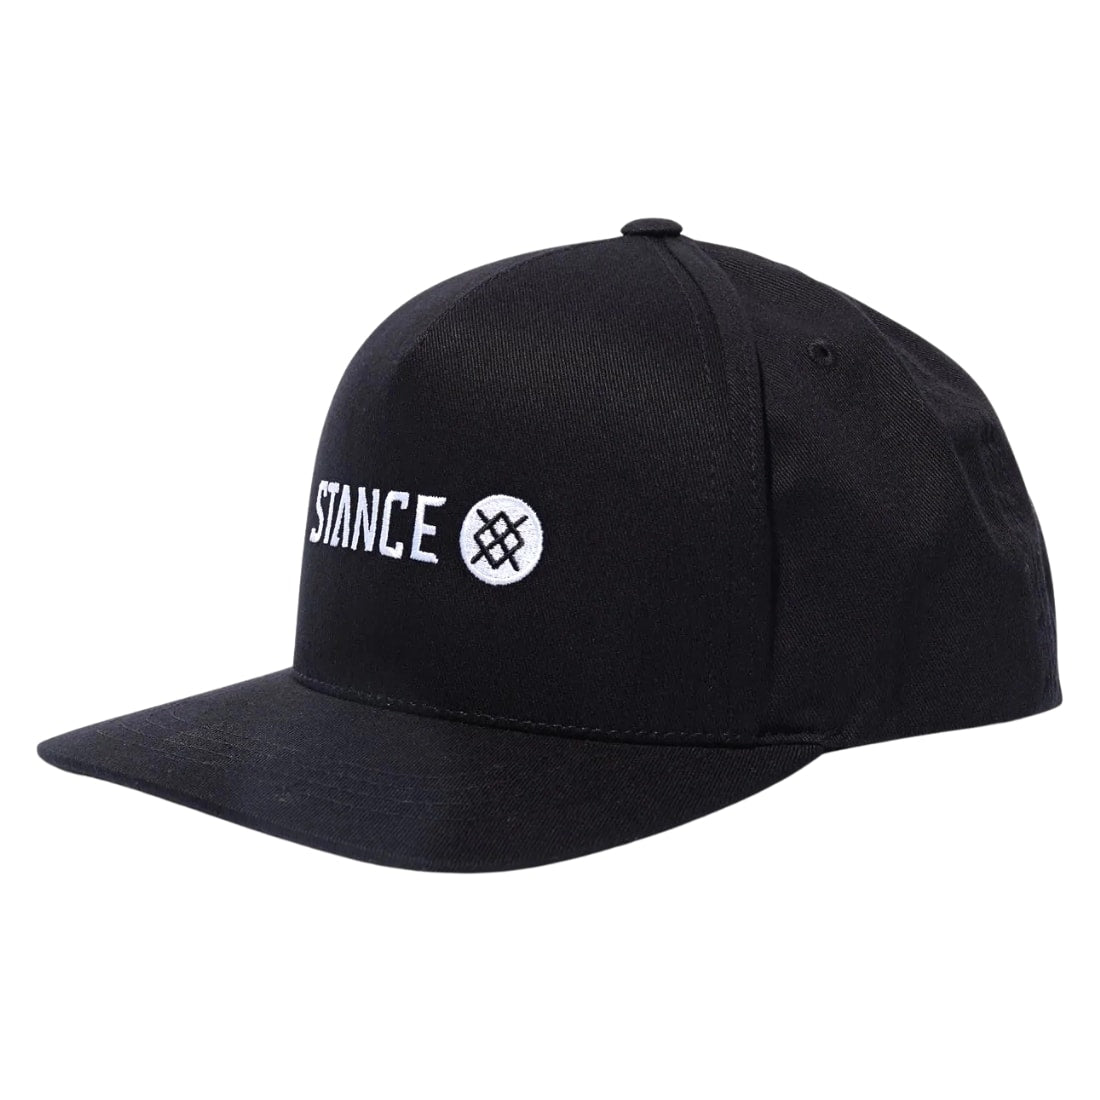 Stance Icon Snapback Hat - Black - Snapback Cap by Stance One Size